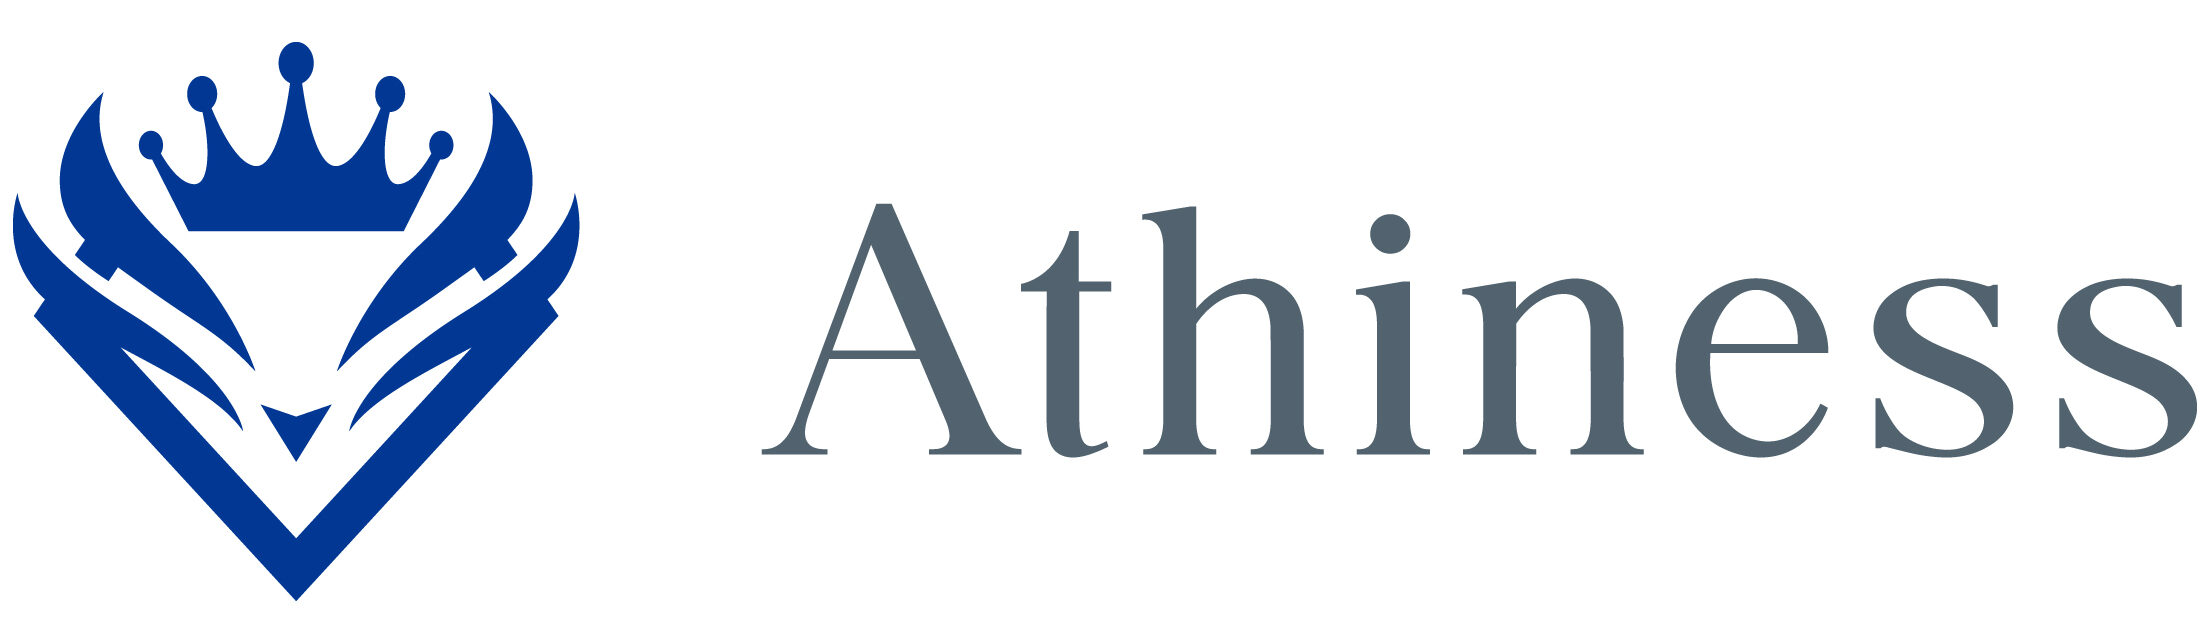 Athiness株式会社